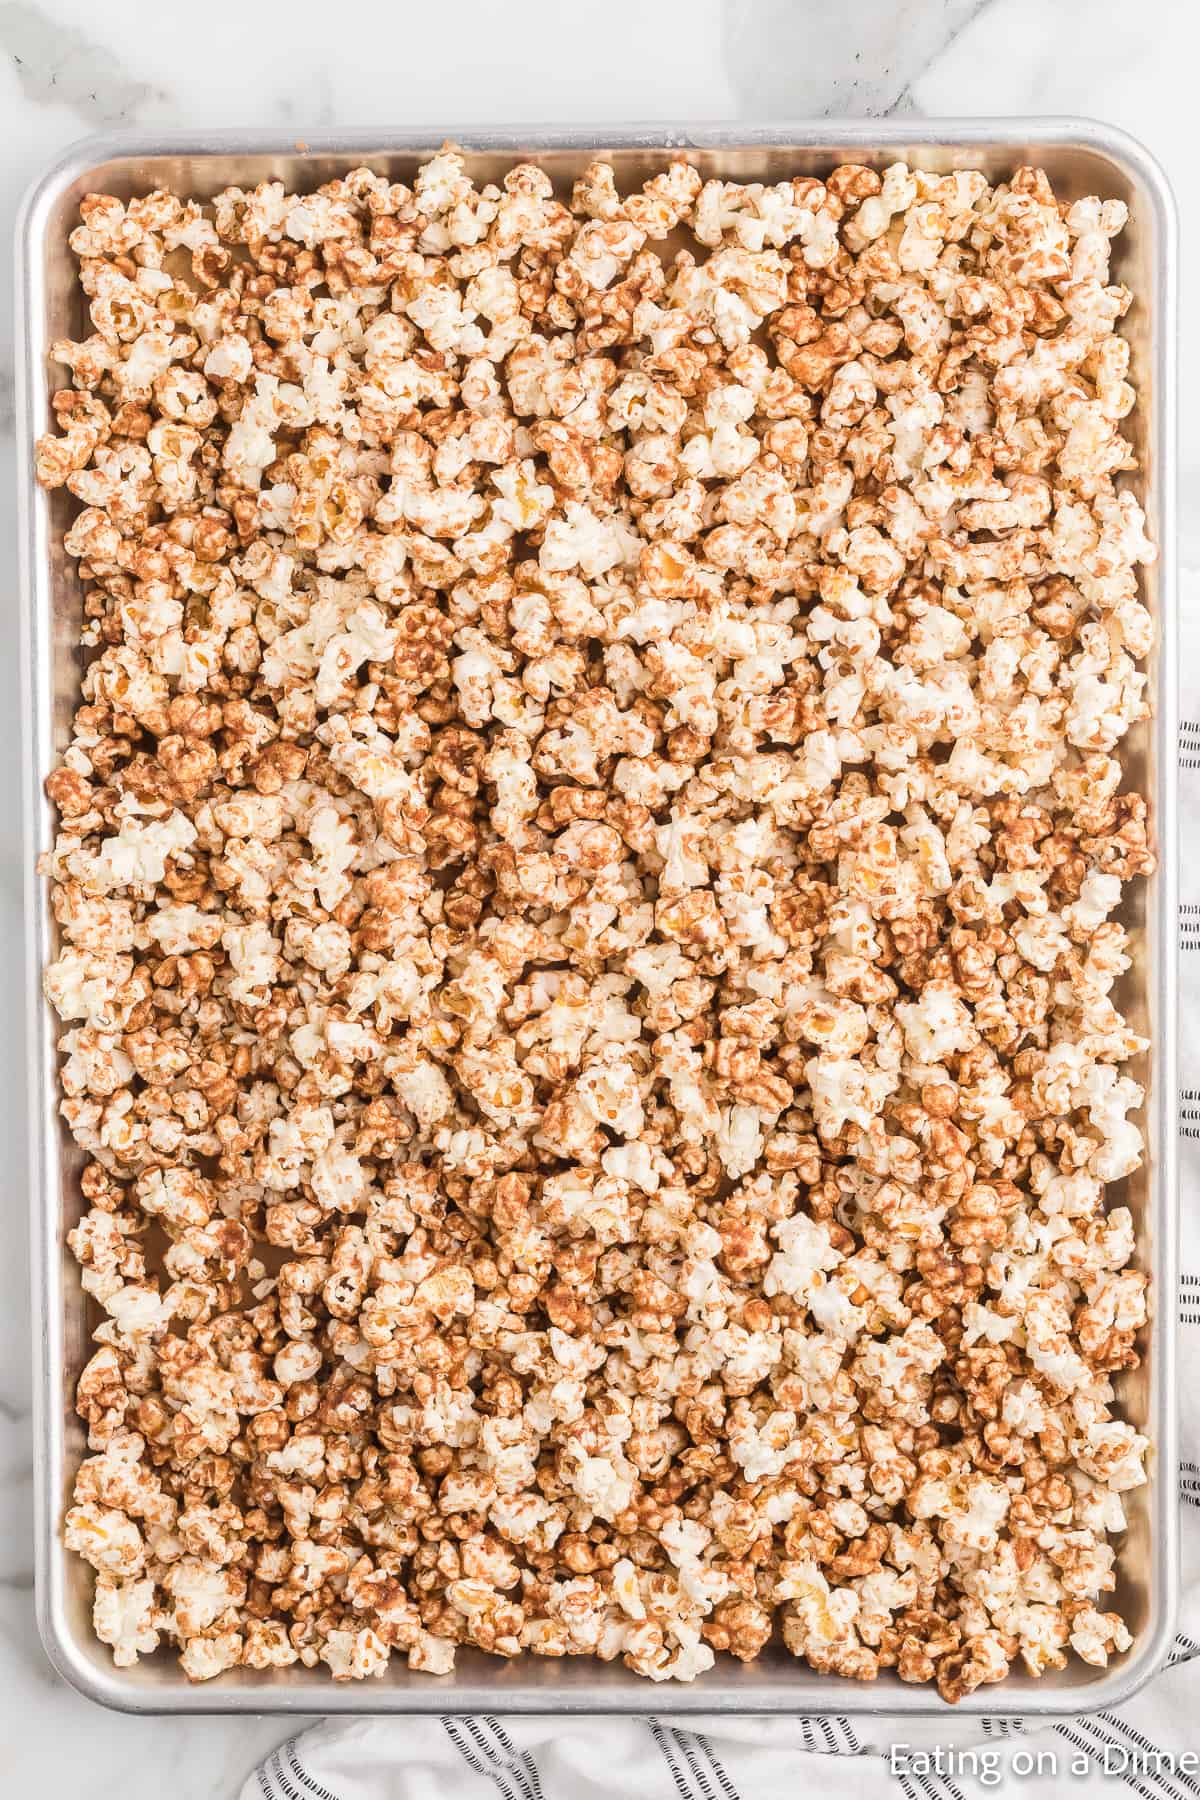 Cinnamon popcorn spread out in a baking sheet